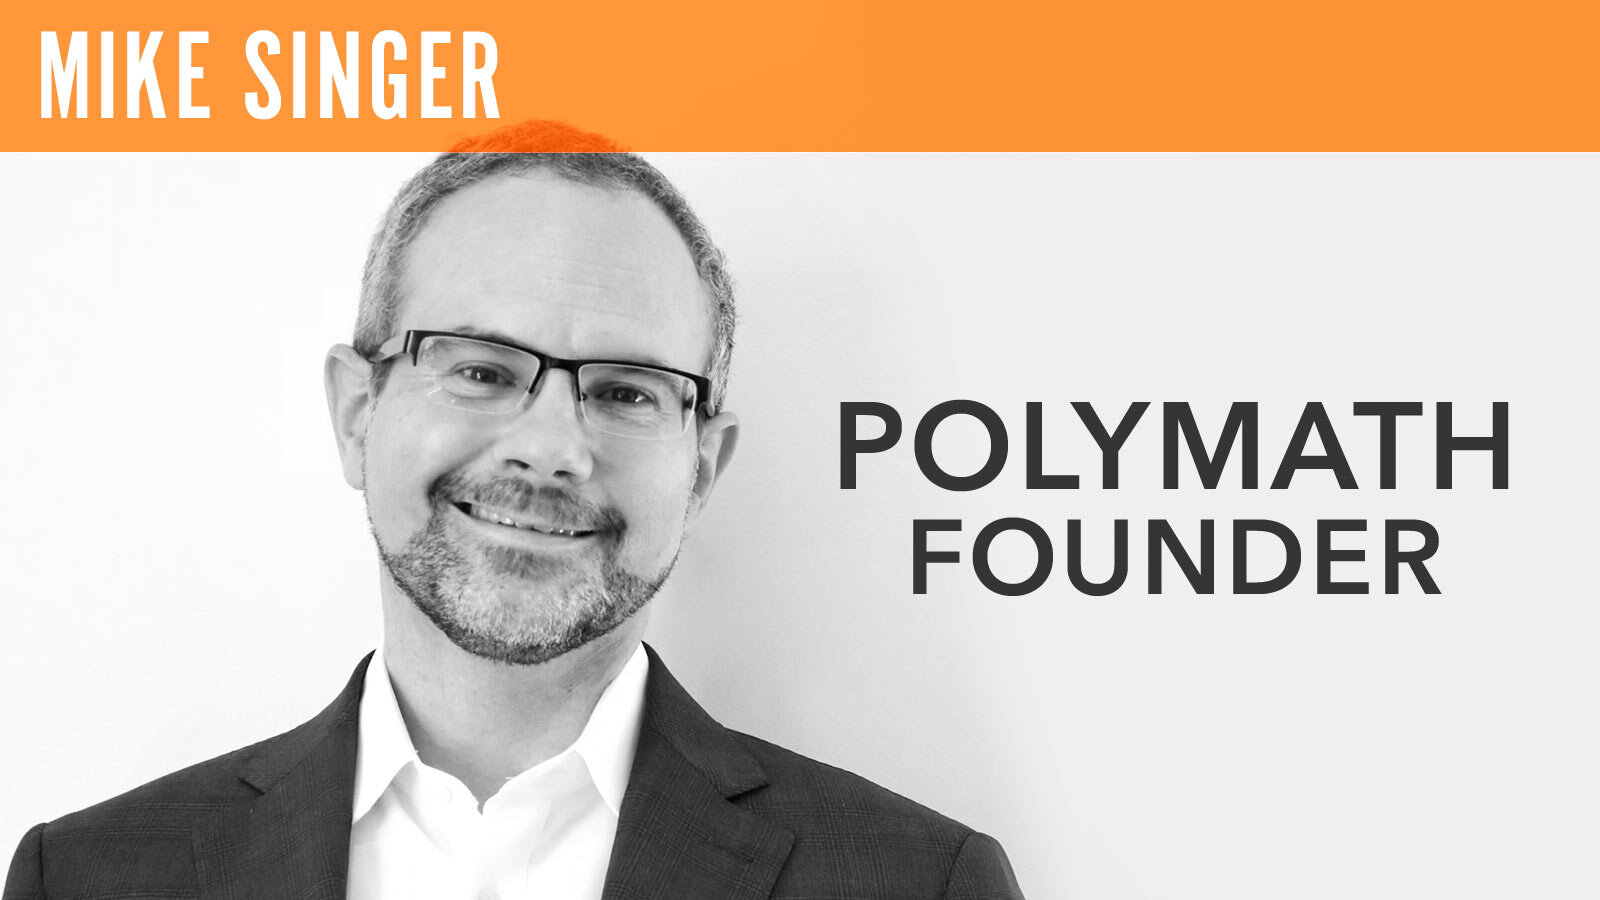 Mike Singer, "Polymath Founder"